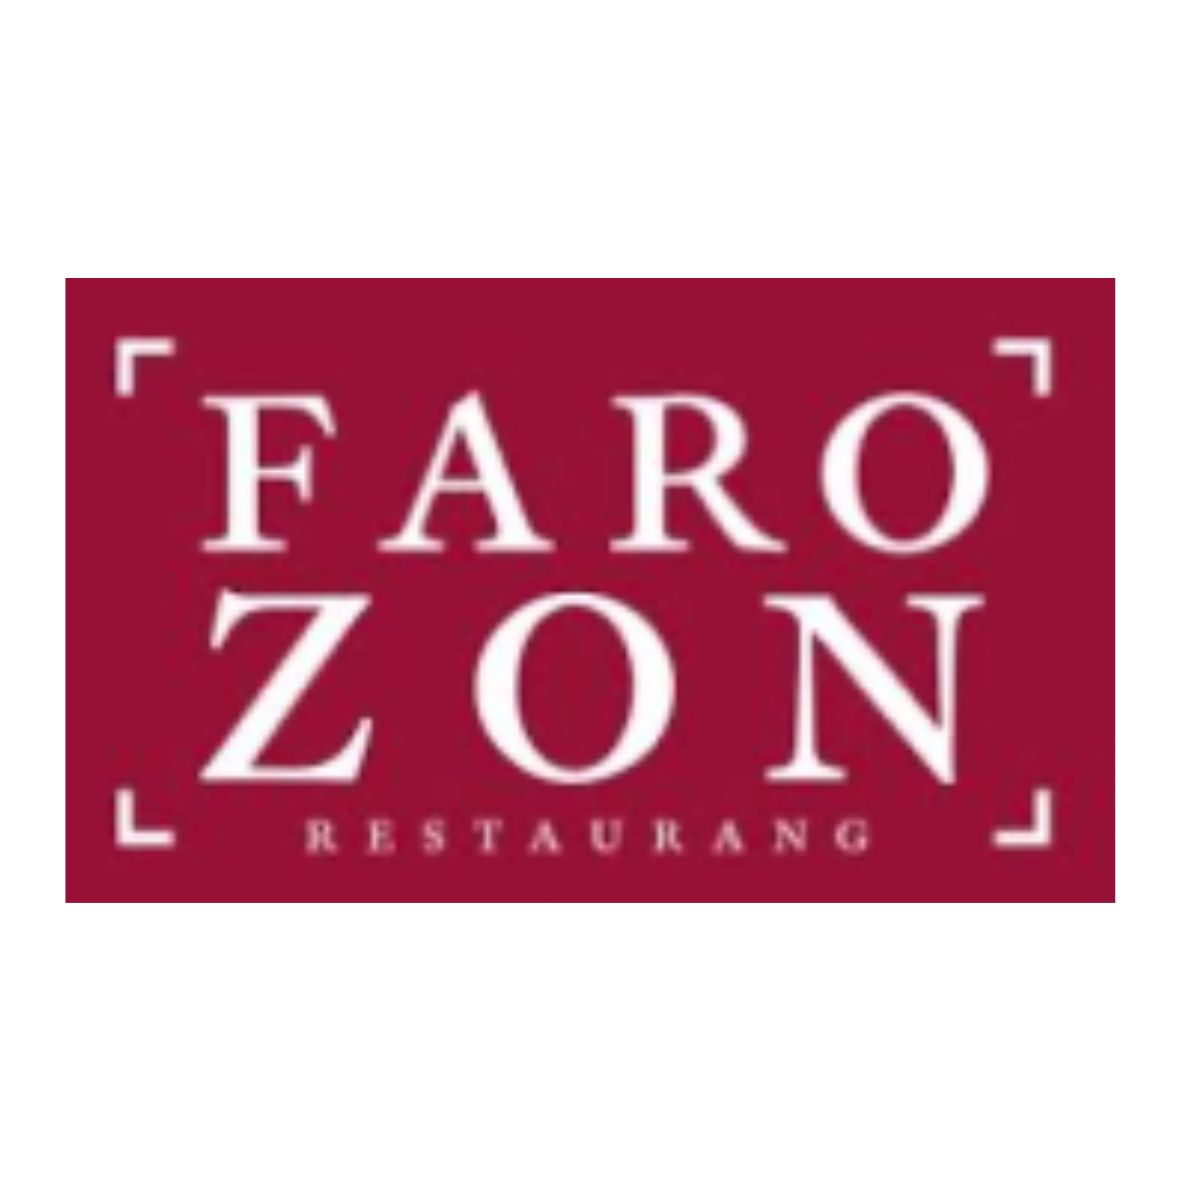 Farozon